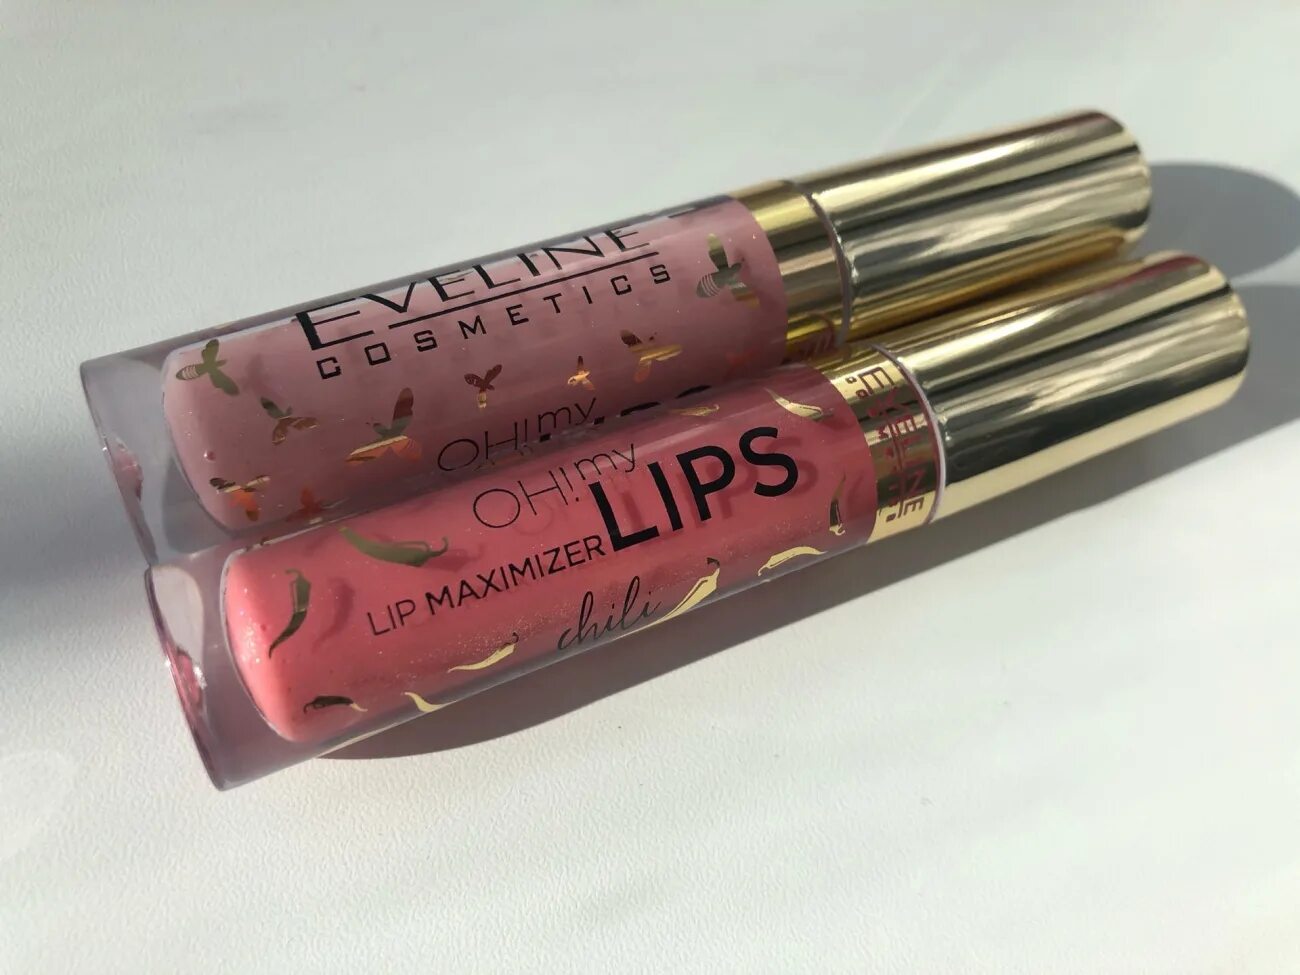 Eveline Oh my Lips-Lip Maximizer. Блеск для губ Эвелин. Eveline XL Lip Maximizer блеск для губ. Eveline Oh my Lips-Lip Maximizer Chili.